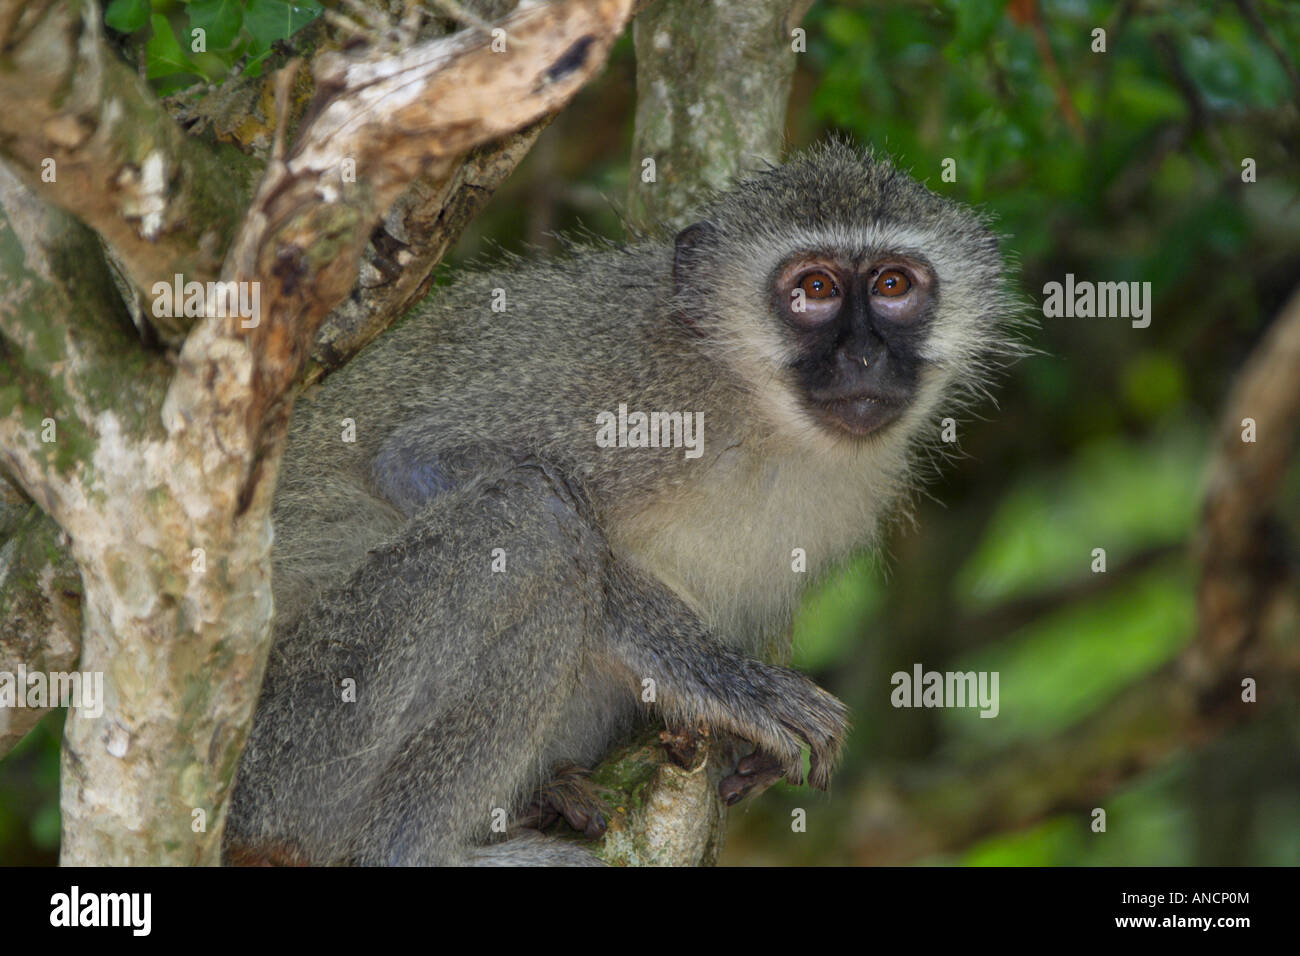 Vervet monkey at Ndumo Stock Photo